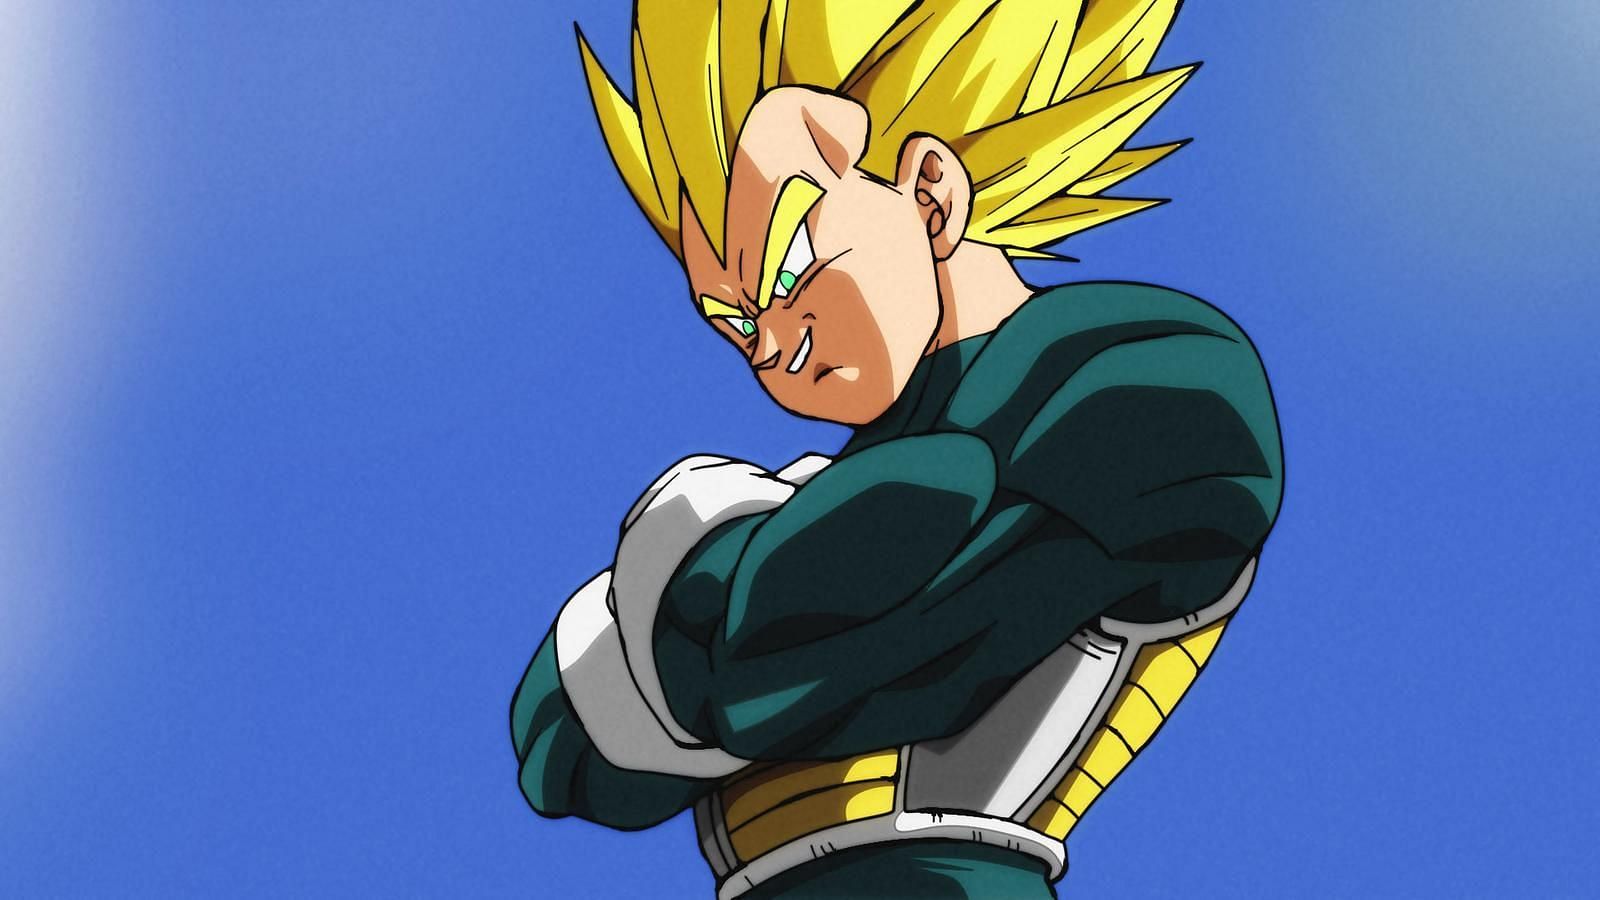 Vegeta as he appears in Dragon Ball Z (Image via Toei Animation)